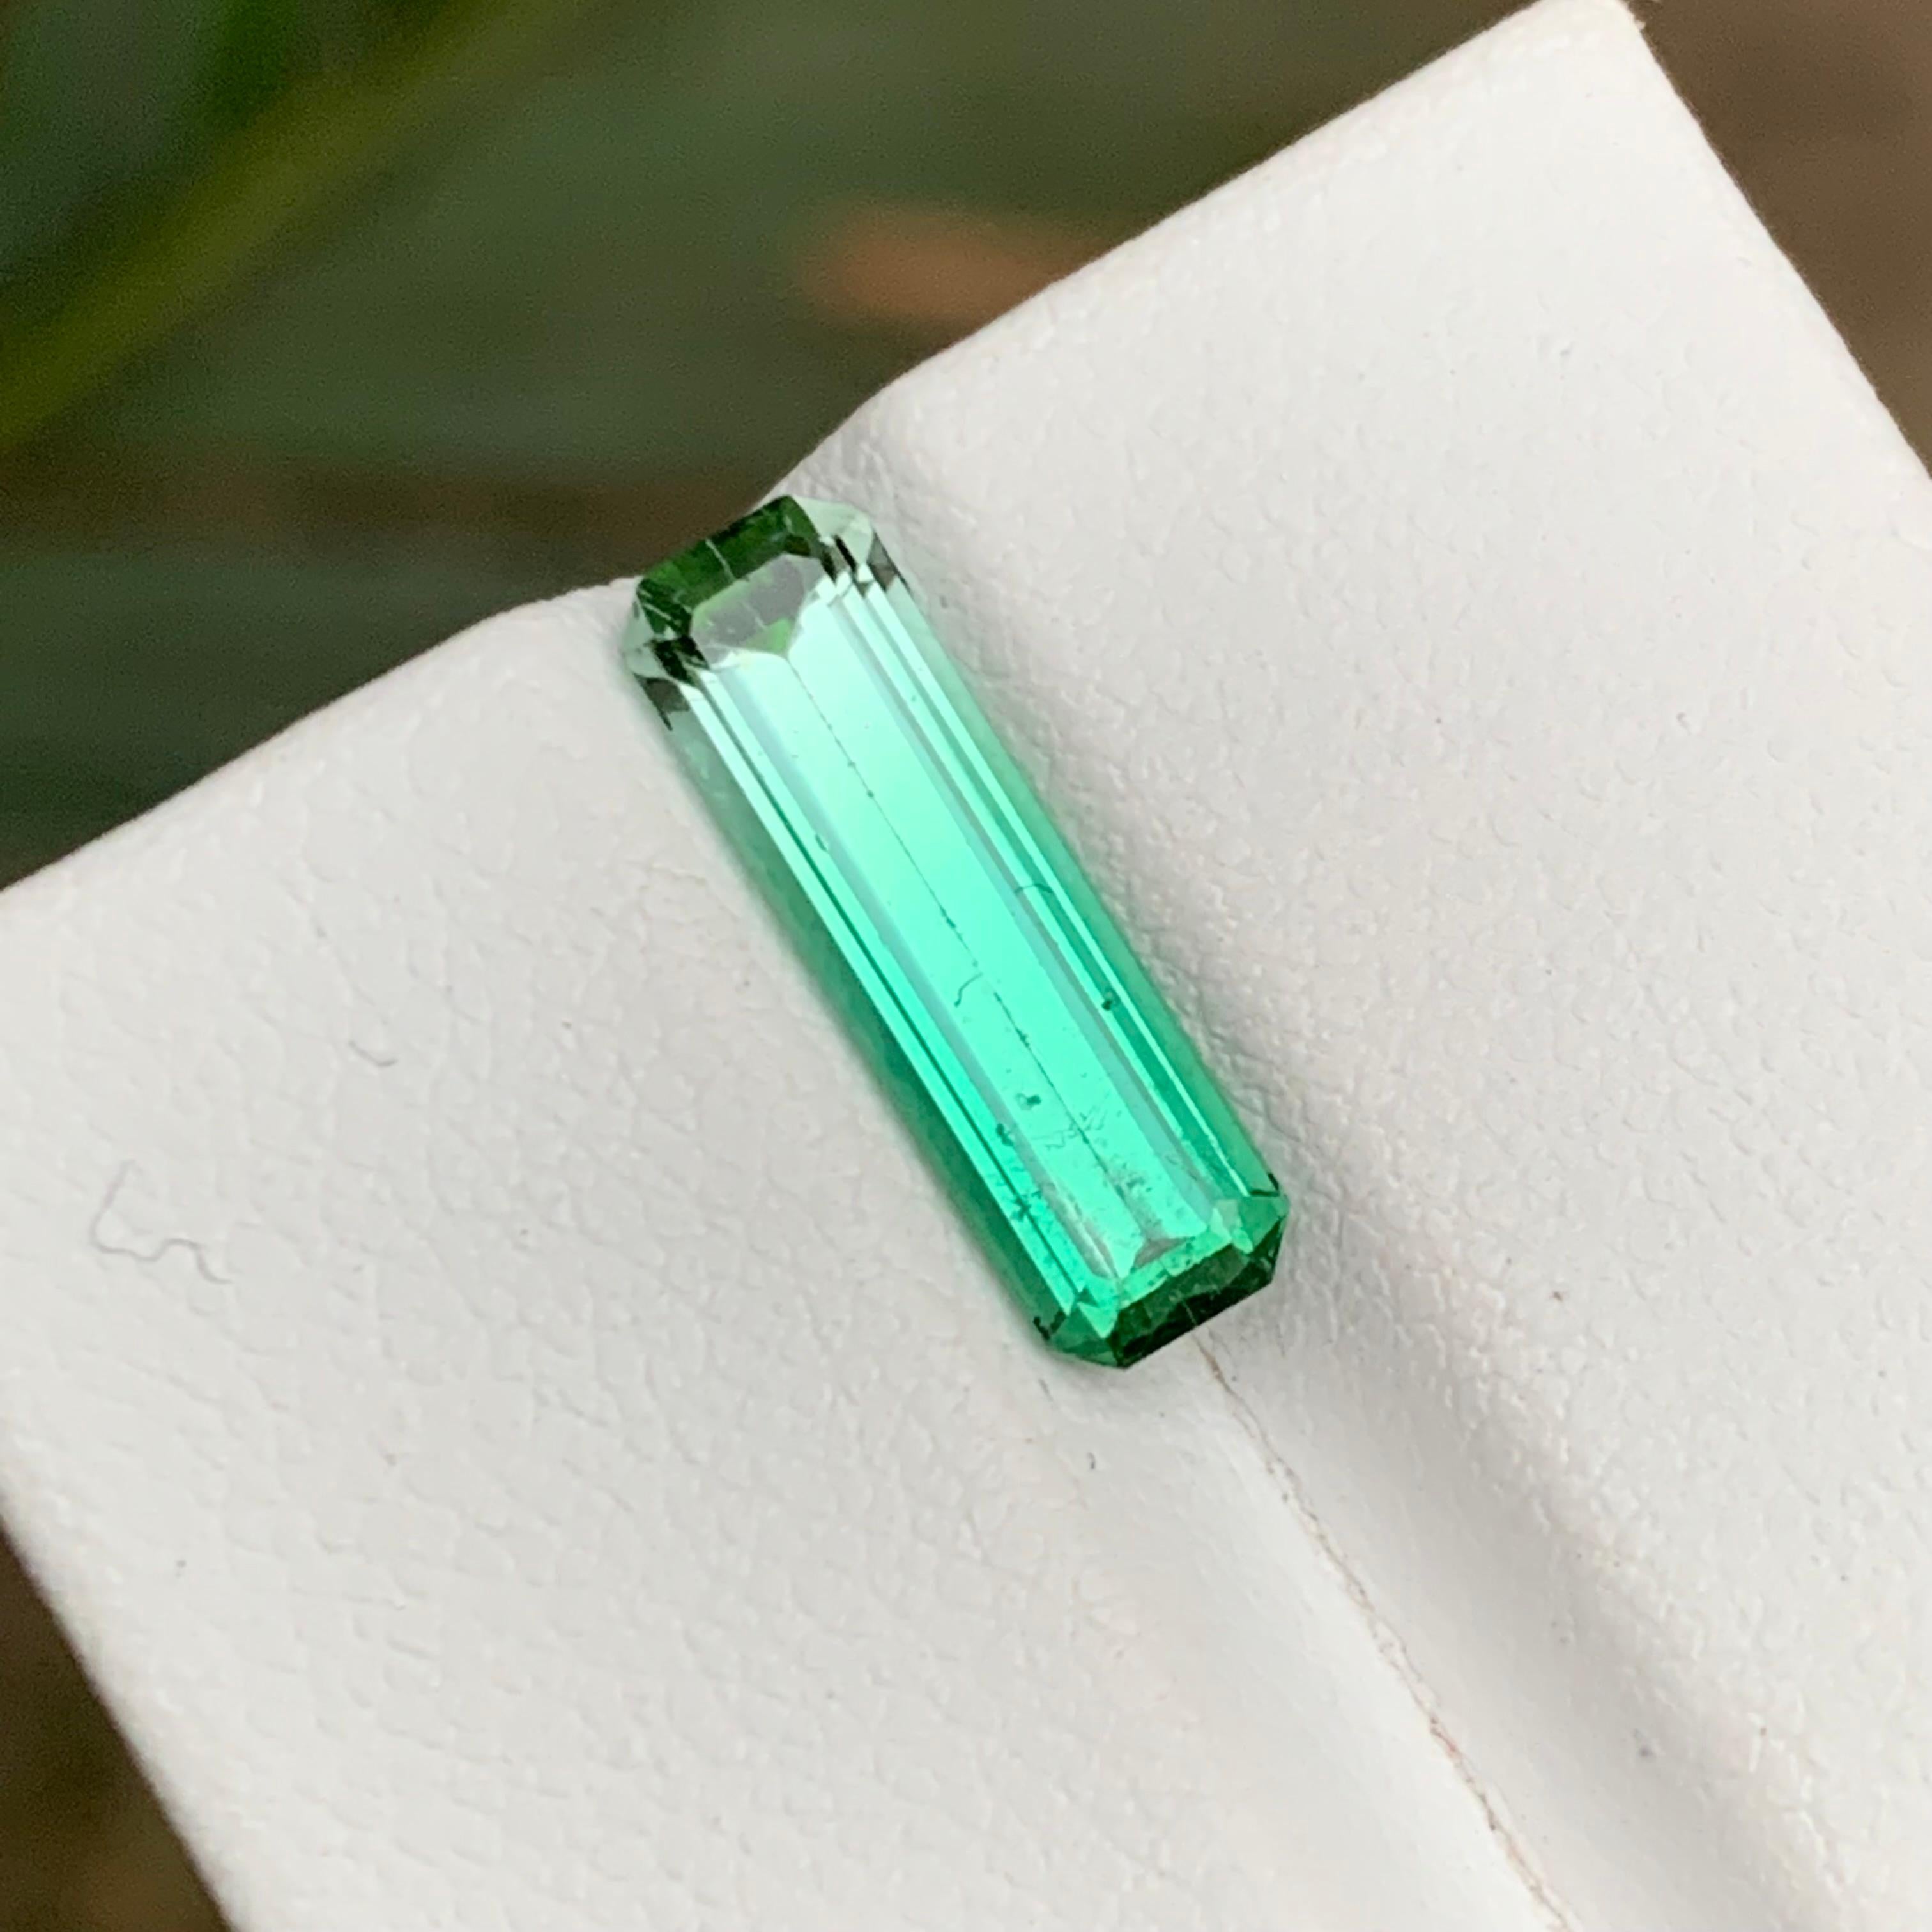 Rare Vivid Bluish Green Bicolor Tourmaline Gemstone 2.85 Ct Emerald Cut for Ring For Sale 6